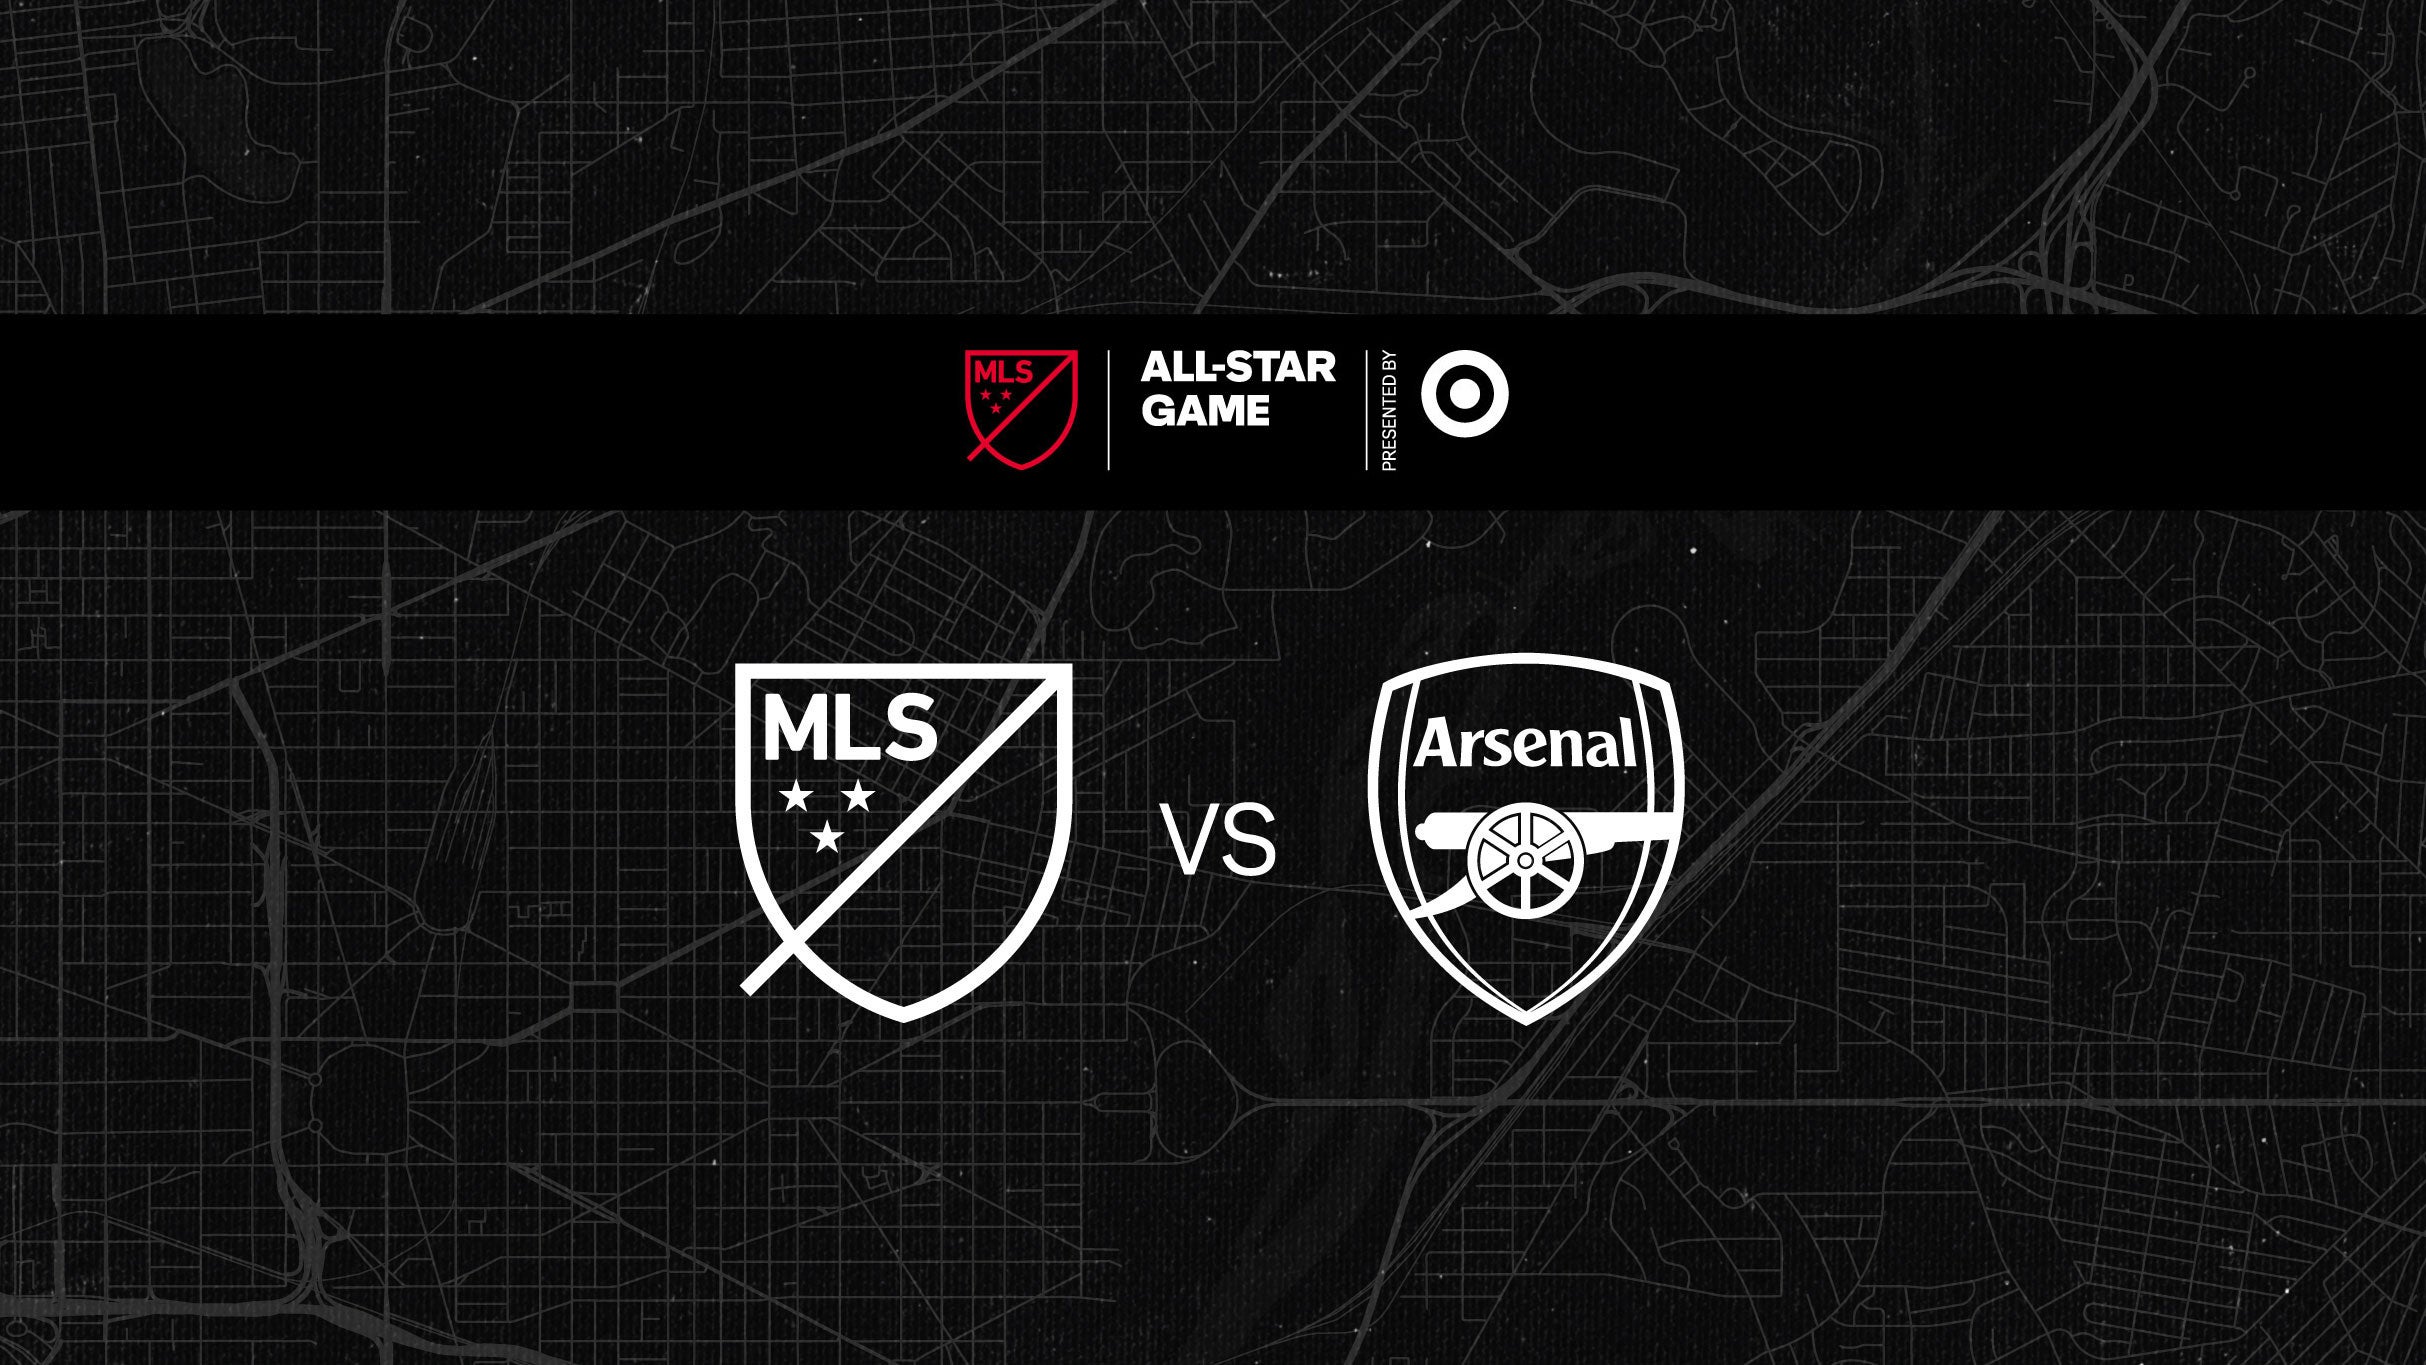 2023 MLS All-Star Game: MLS vs. Arsenal